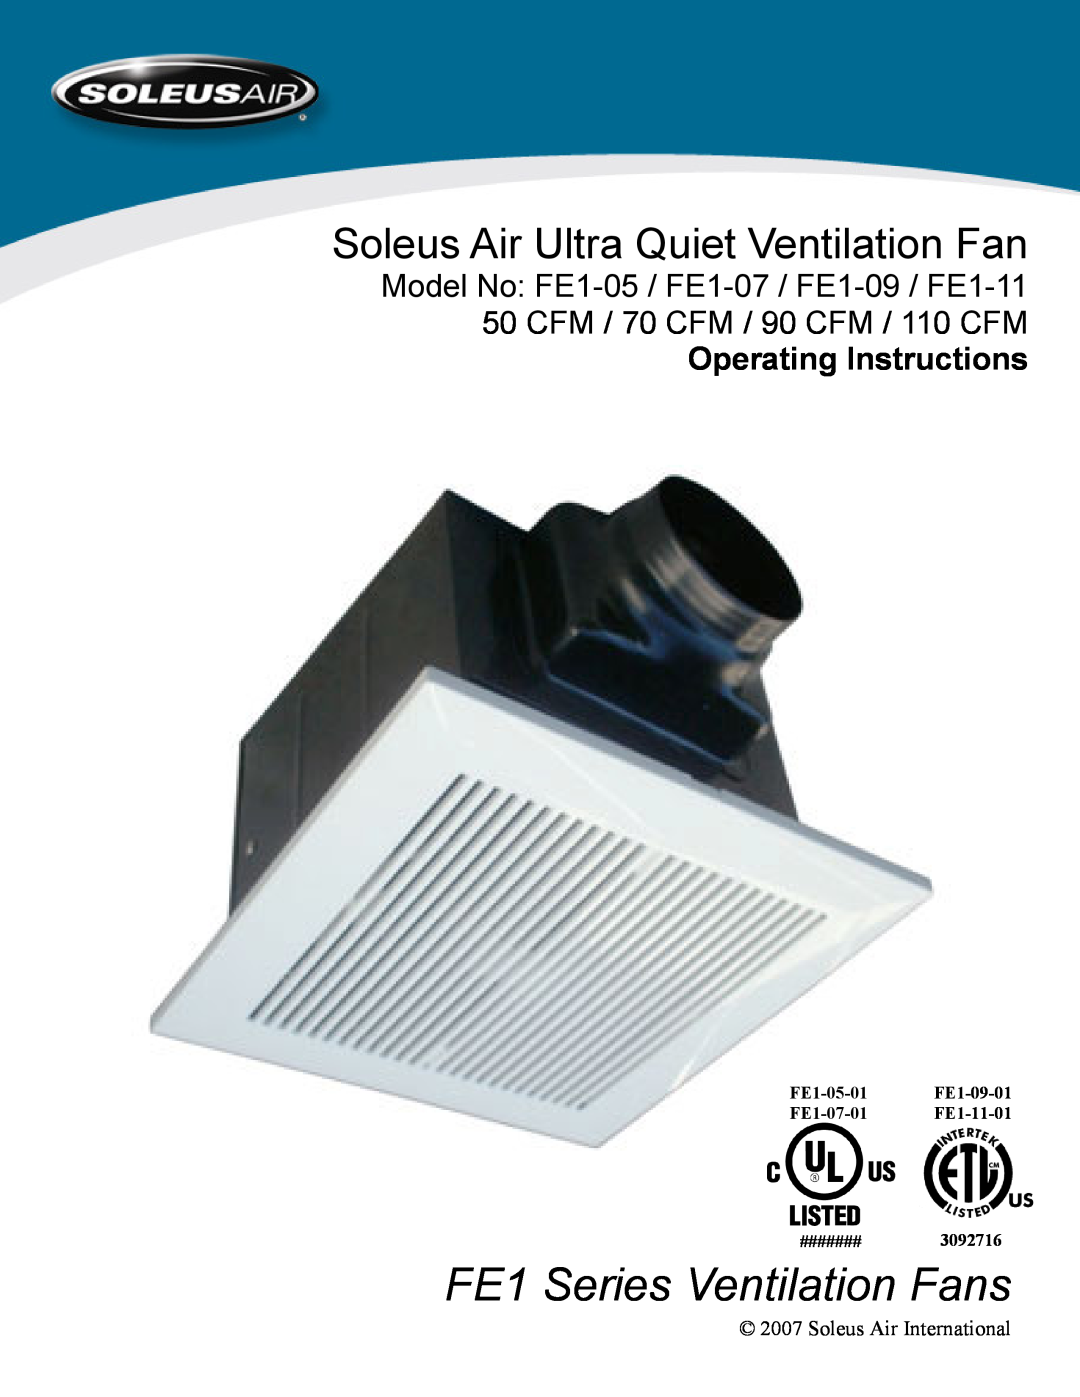 Soleus Air FE1-07. FE1-09, 90CFM, 70CFM, FE1-11 manual FE1 Series Ventilation Fans, Soleus Air Ultra Quiet Ventilation Fan 